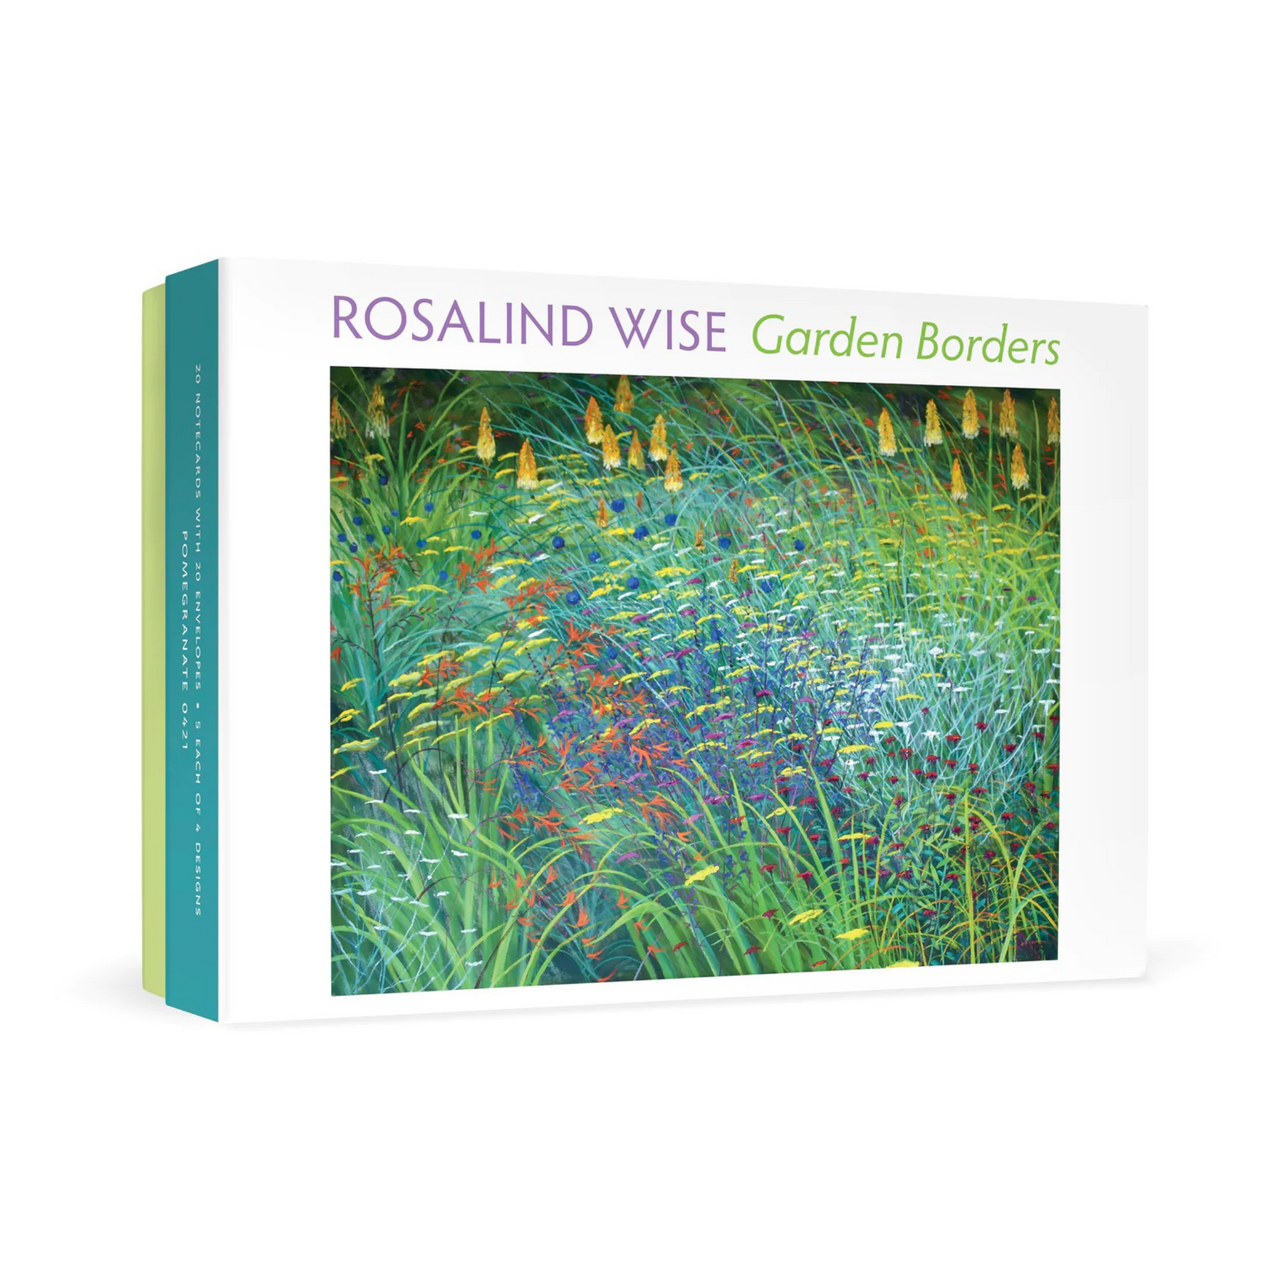 Pomegranate: Rosalind Wise "Garden Borders" notecards